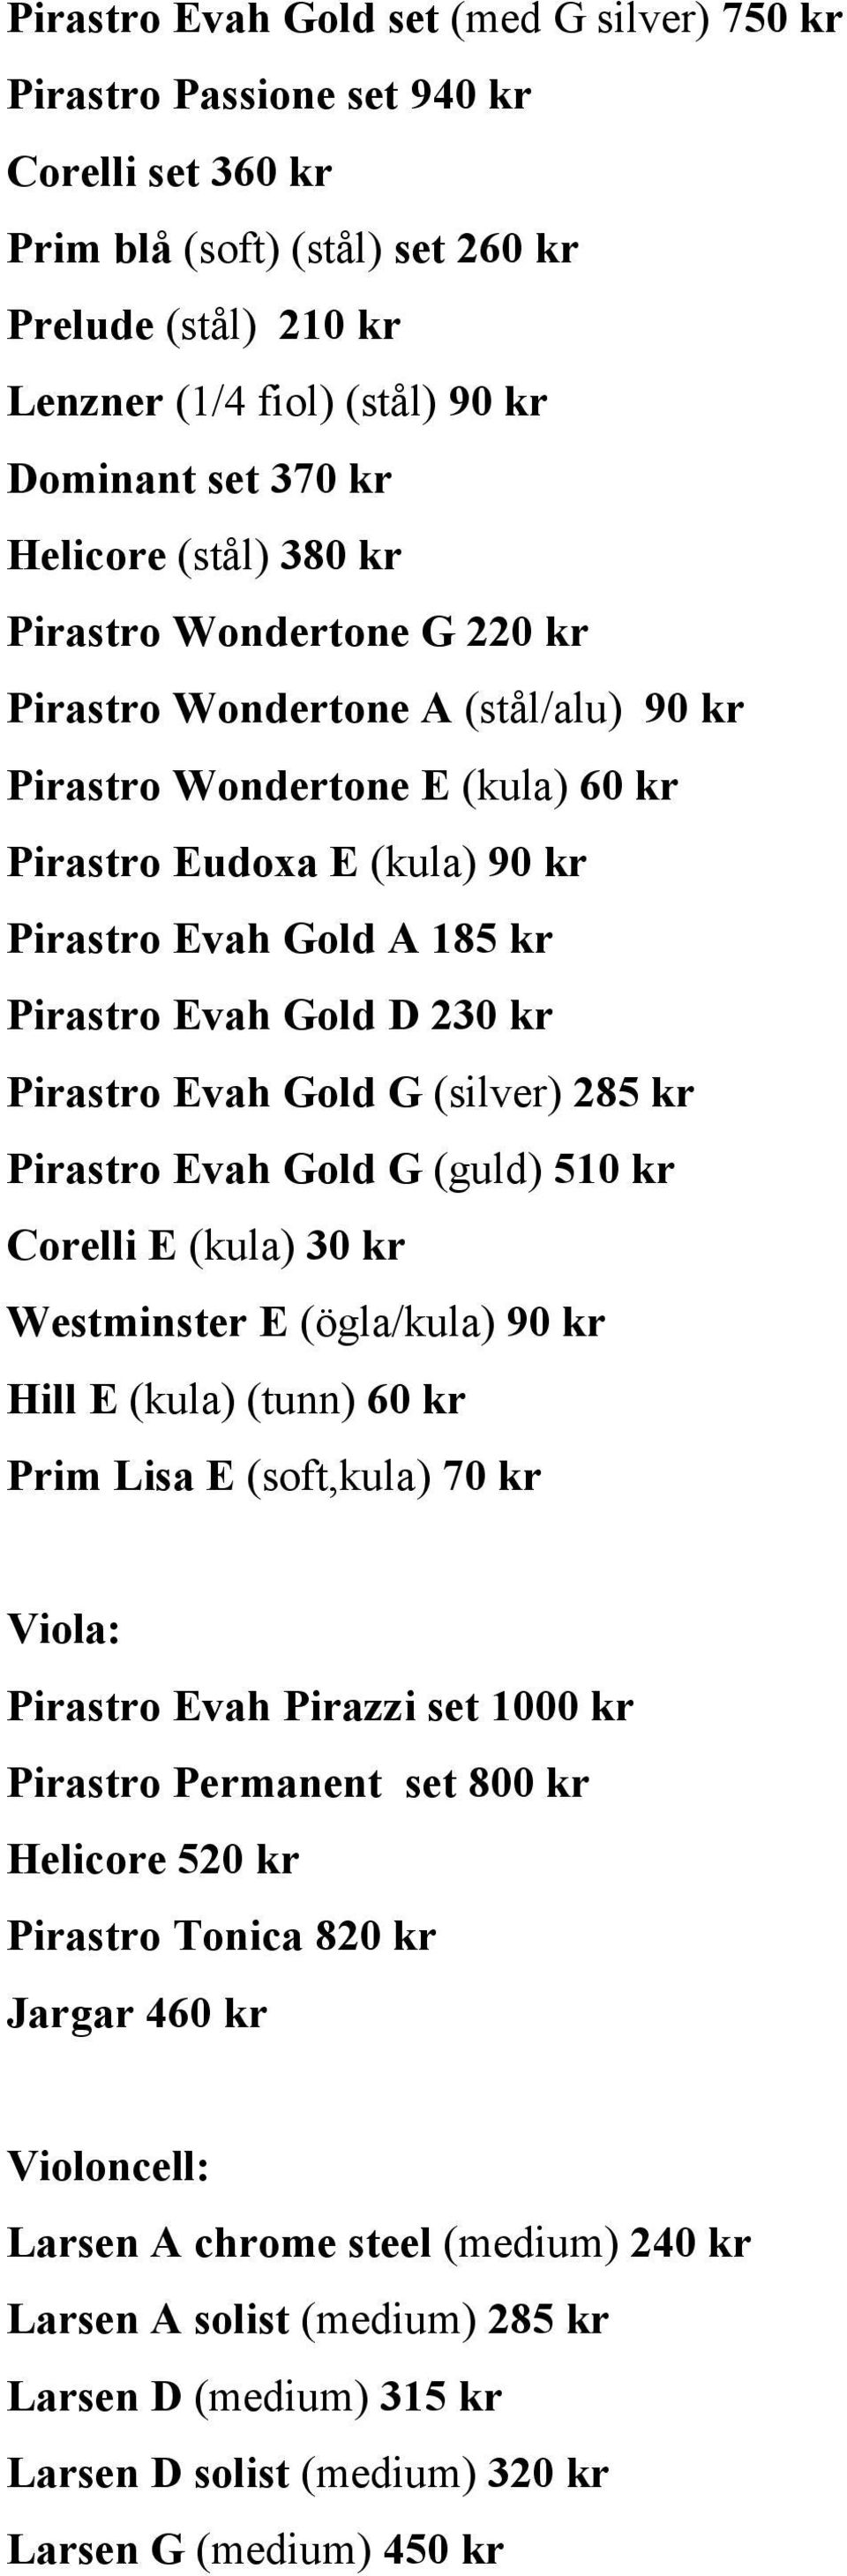 Evah Gold D 230 kr Pirastro Evah Gold G (silver) 285 kr Pirastro Evah Gold G (guld) 510 kr Corelli E (kula) 30 kr Westminster E (ögla/kula) 90 kr Hill E (kula) (tunn) 60 kr Prim Lisa E (soft,kula) 70